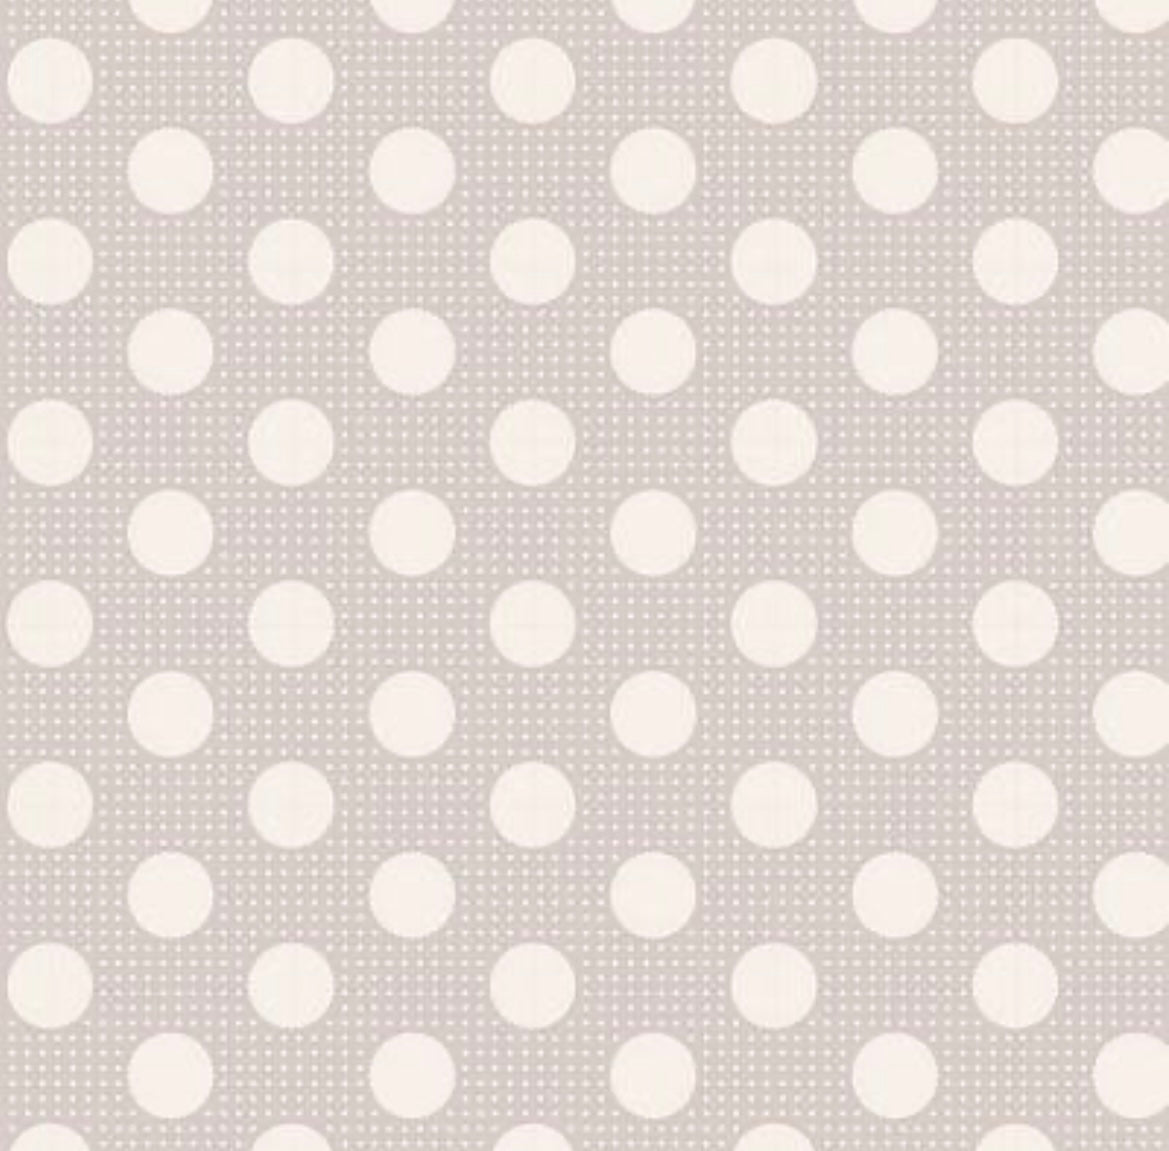 Tilda Medium Dots - Light Grey by Tilda Fabrics